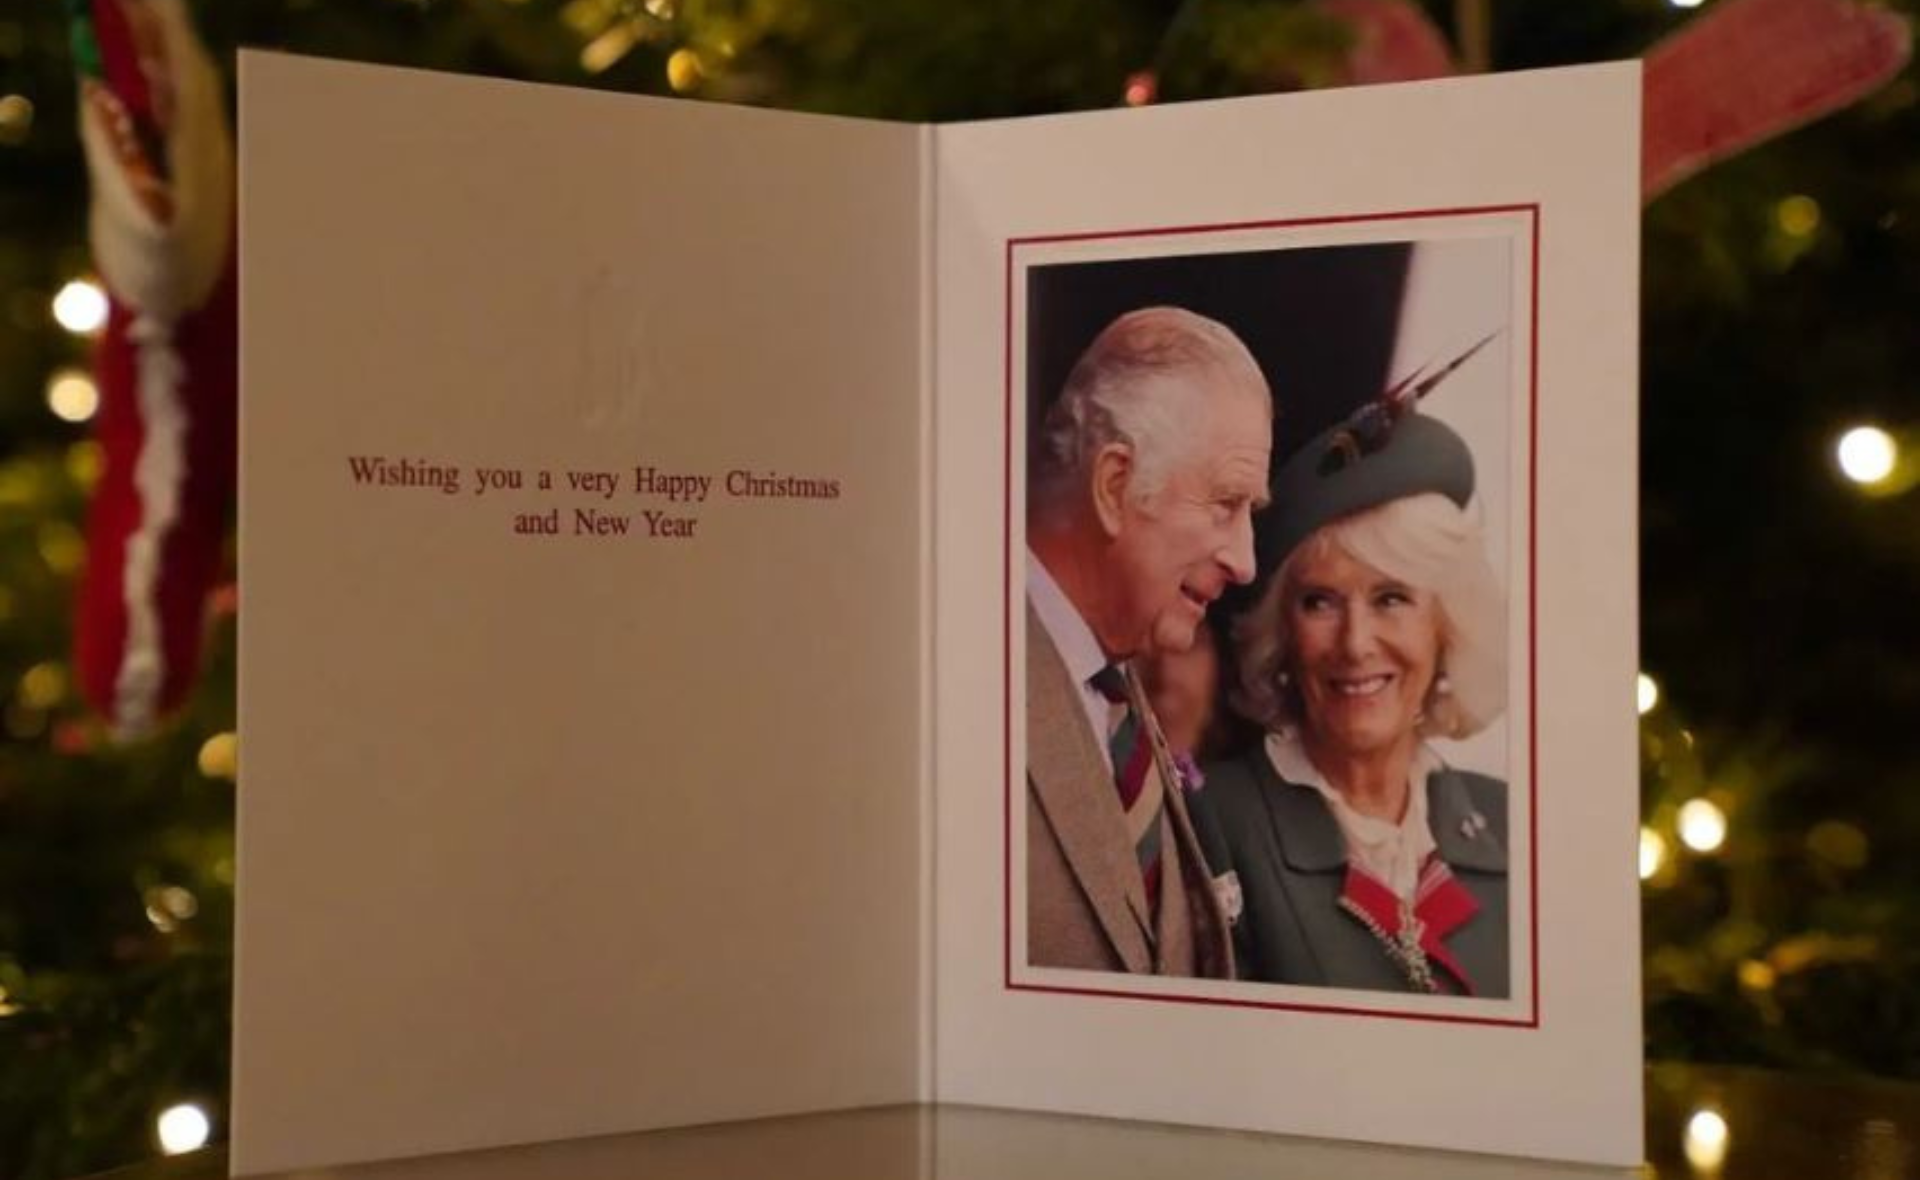 King Charles used his coronation portrait as his Christmas card